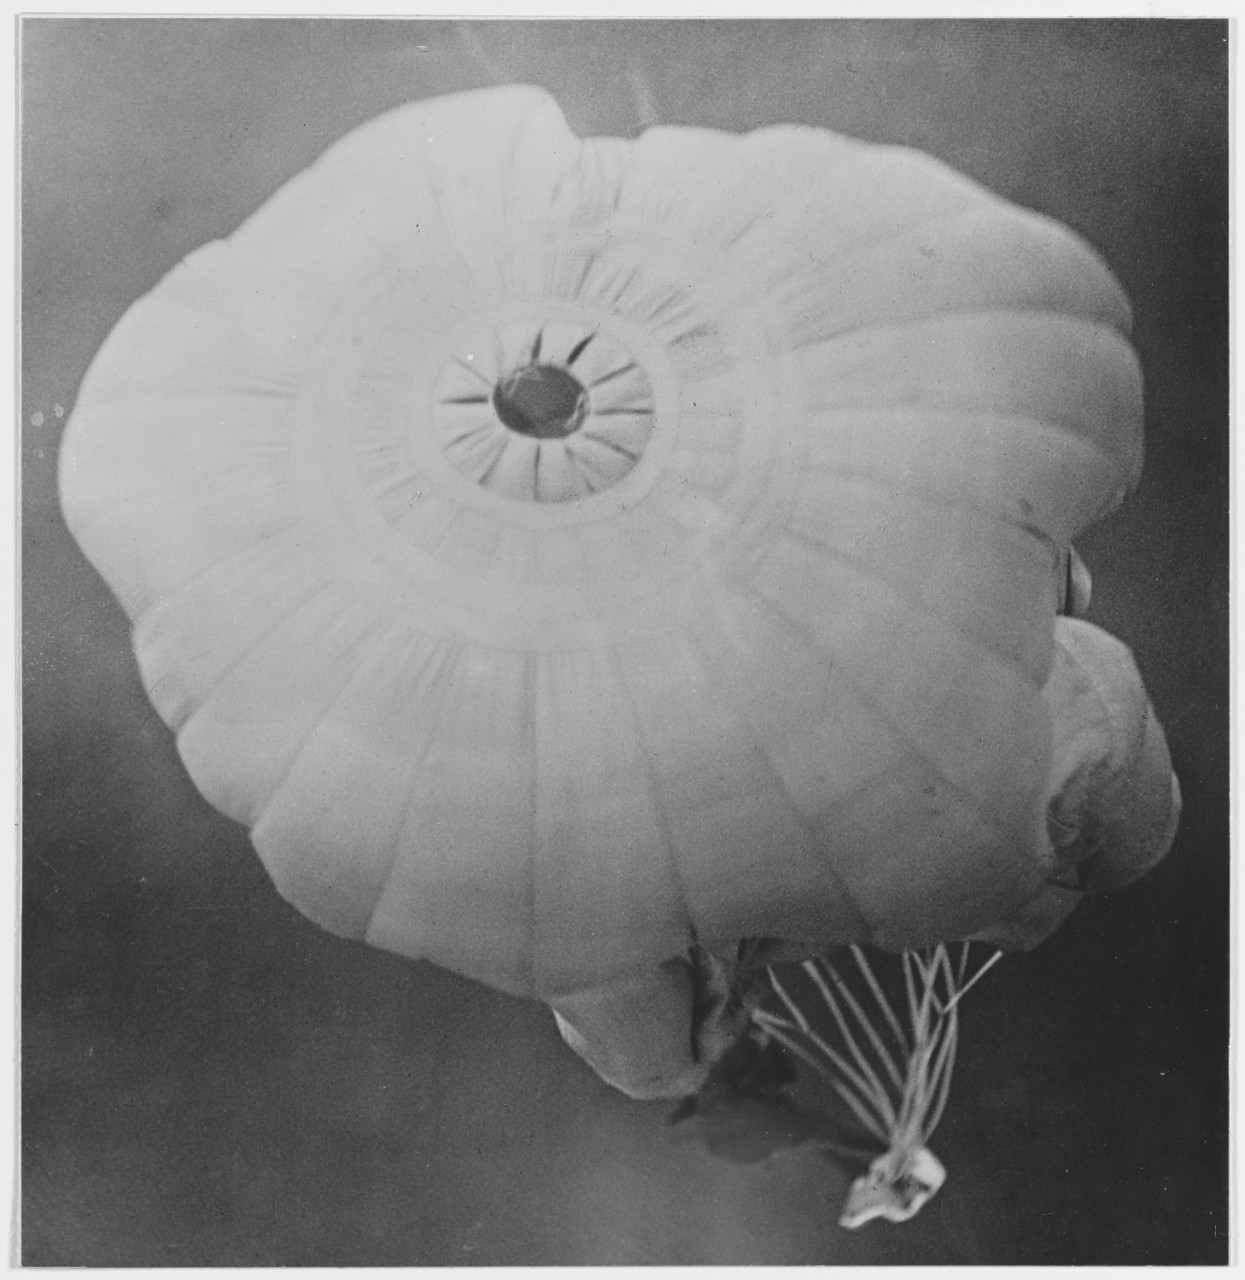 Falling parachute